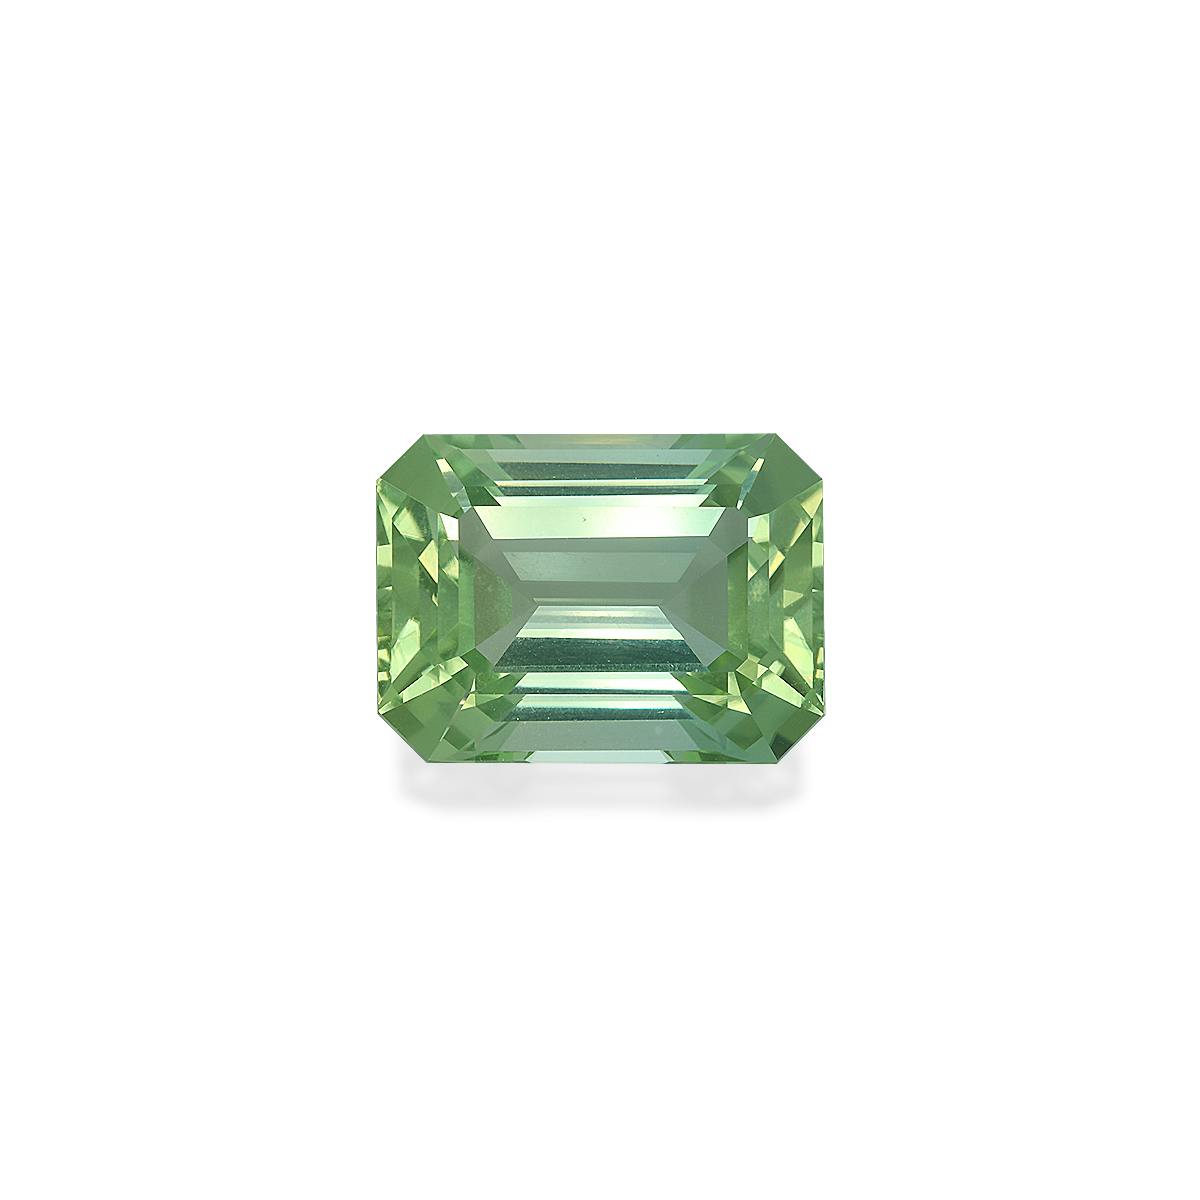 Natural Tourmaline Green Square Shape 20 Ct Certifeid Loose Gemstones Pair 